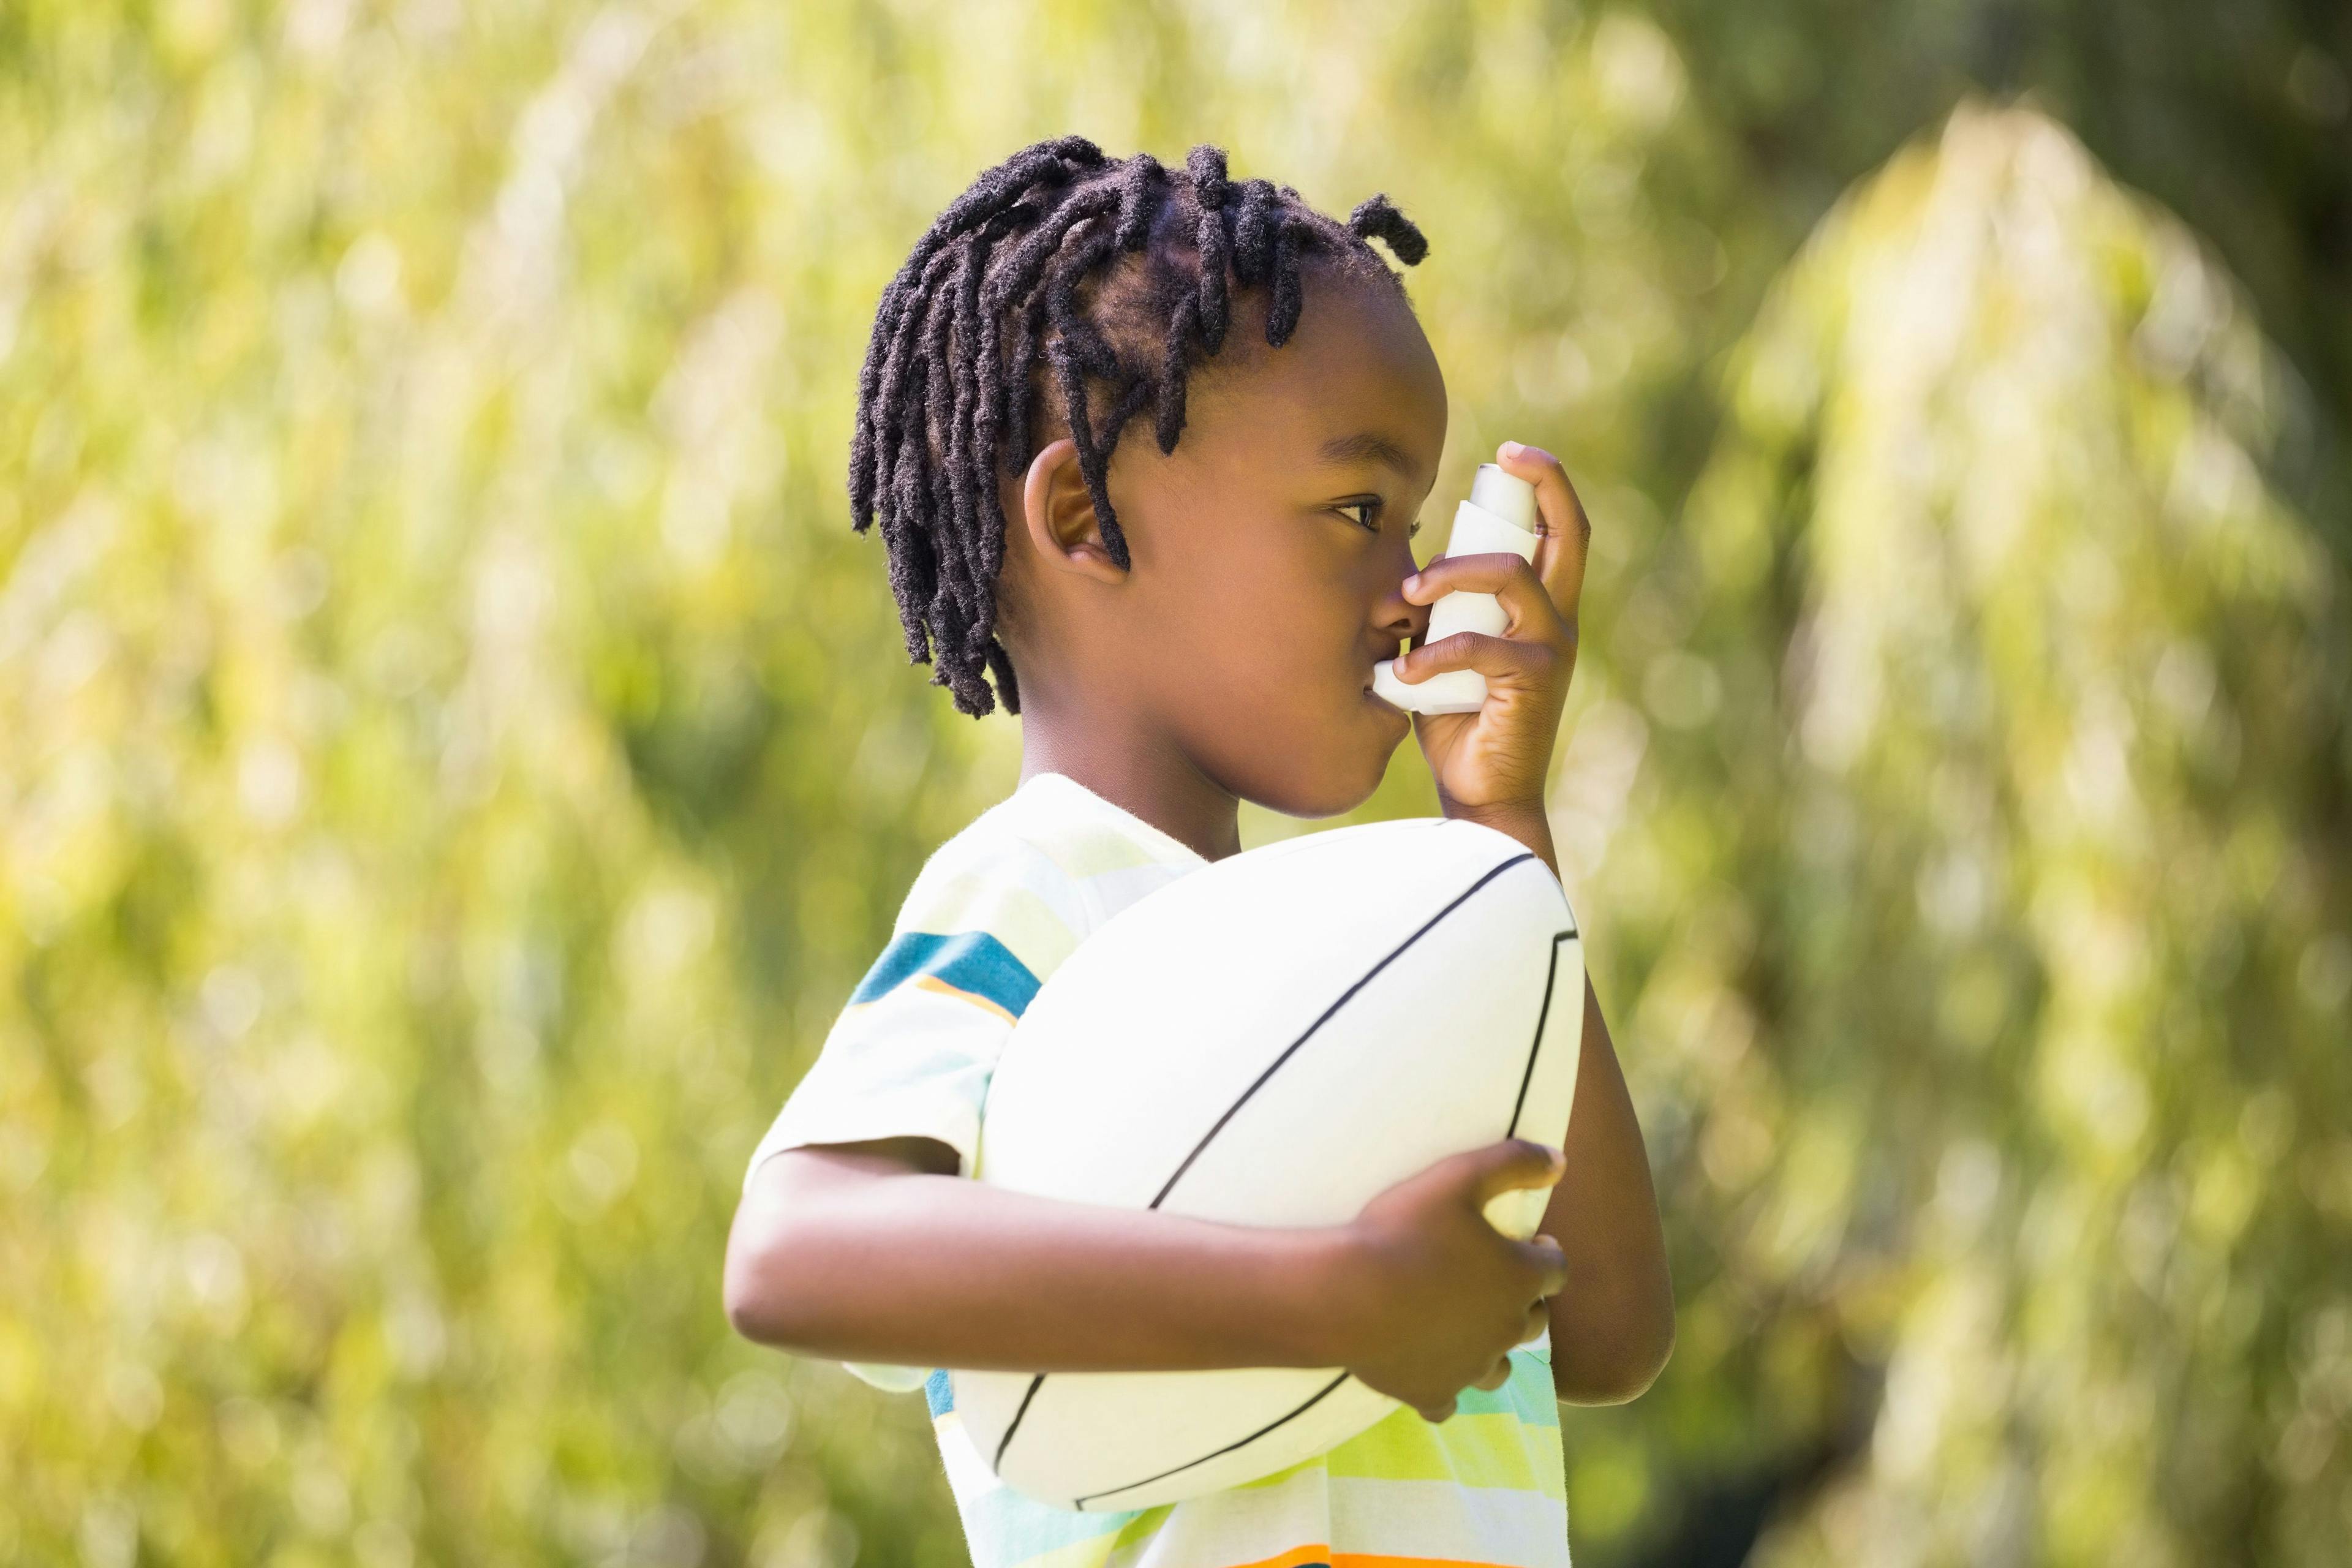 Child is using an asthma inhaler | Image credit: WavebreakmediaMicro - stock.adobe.com